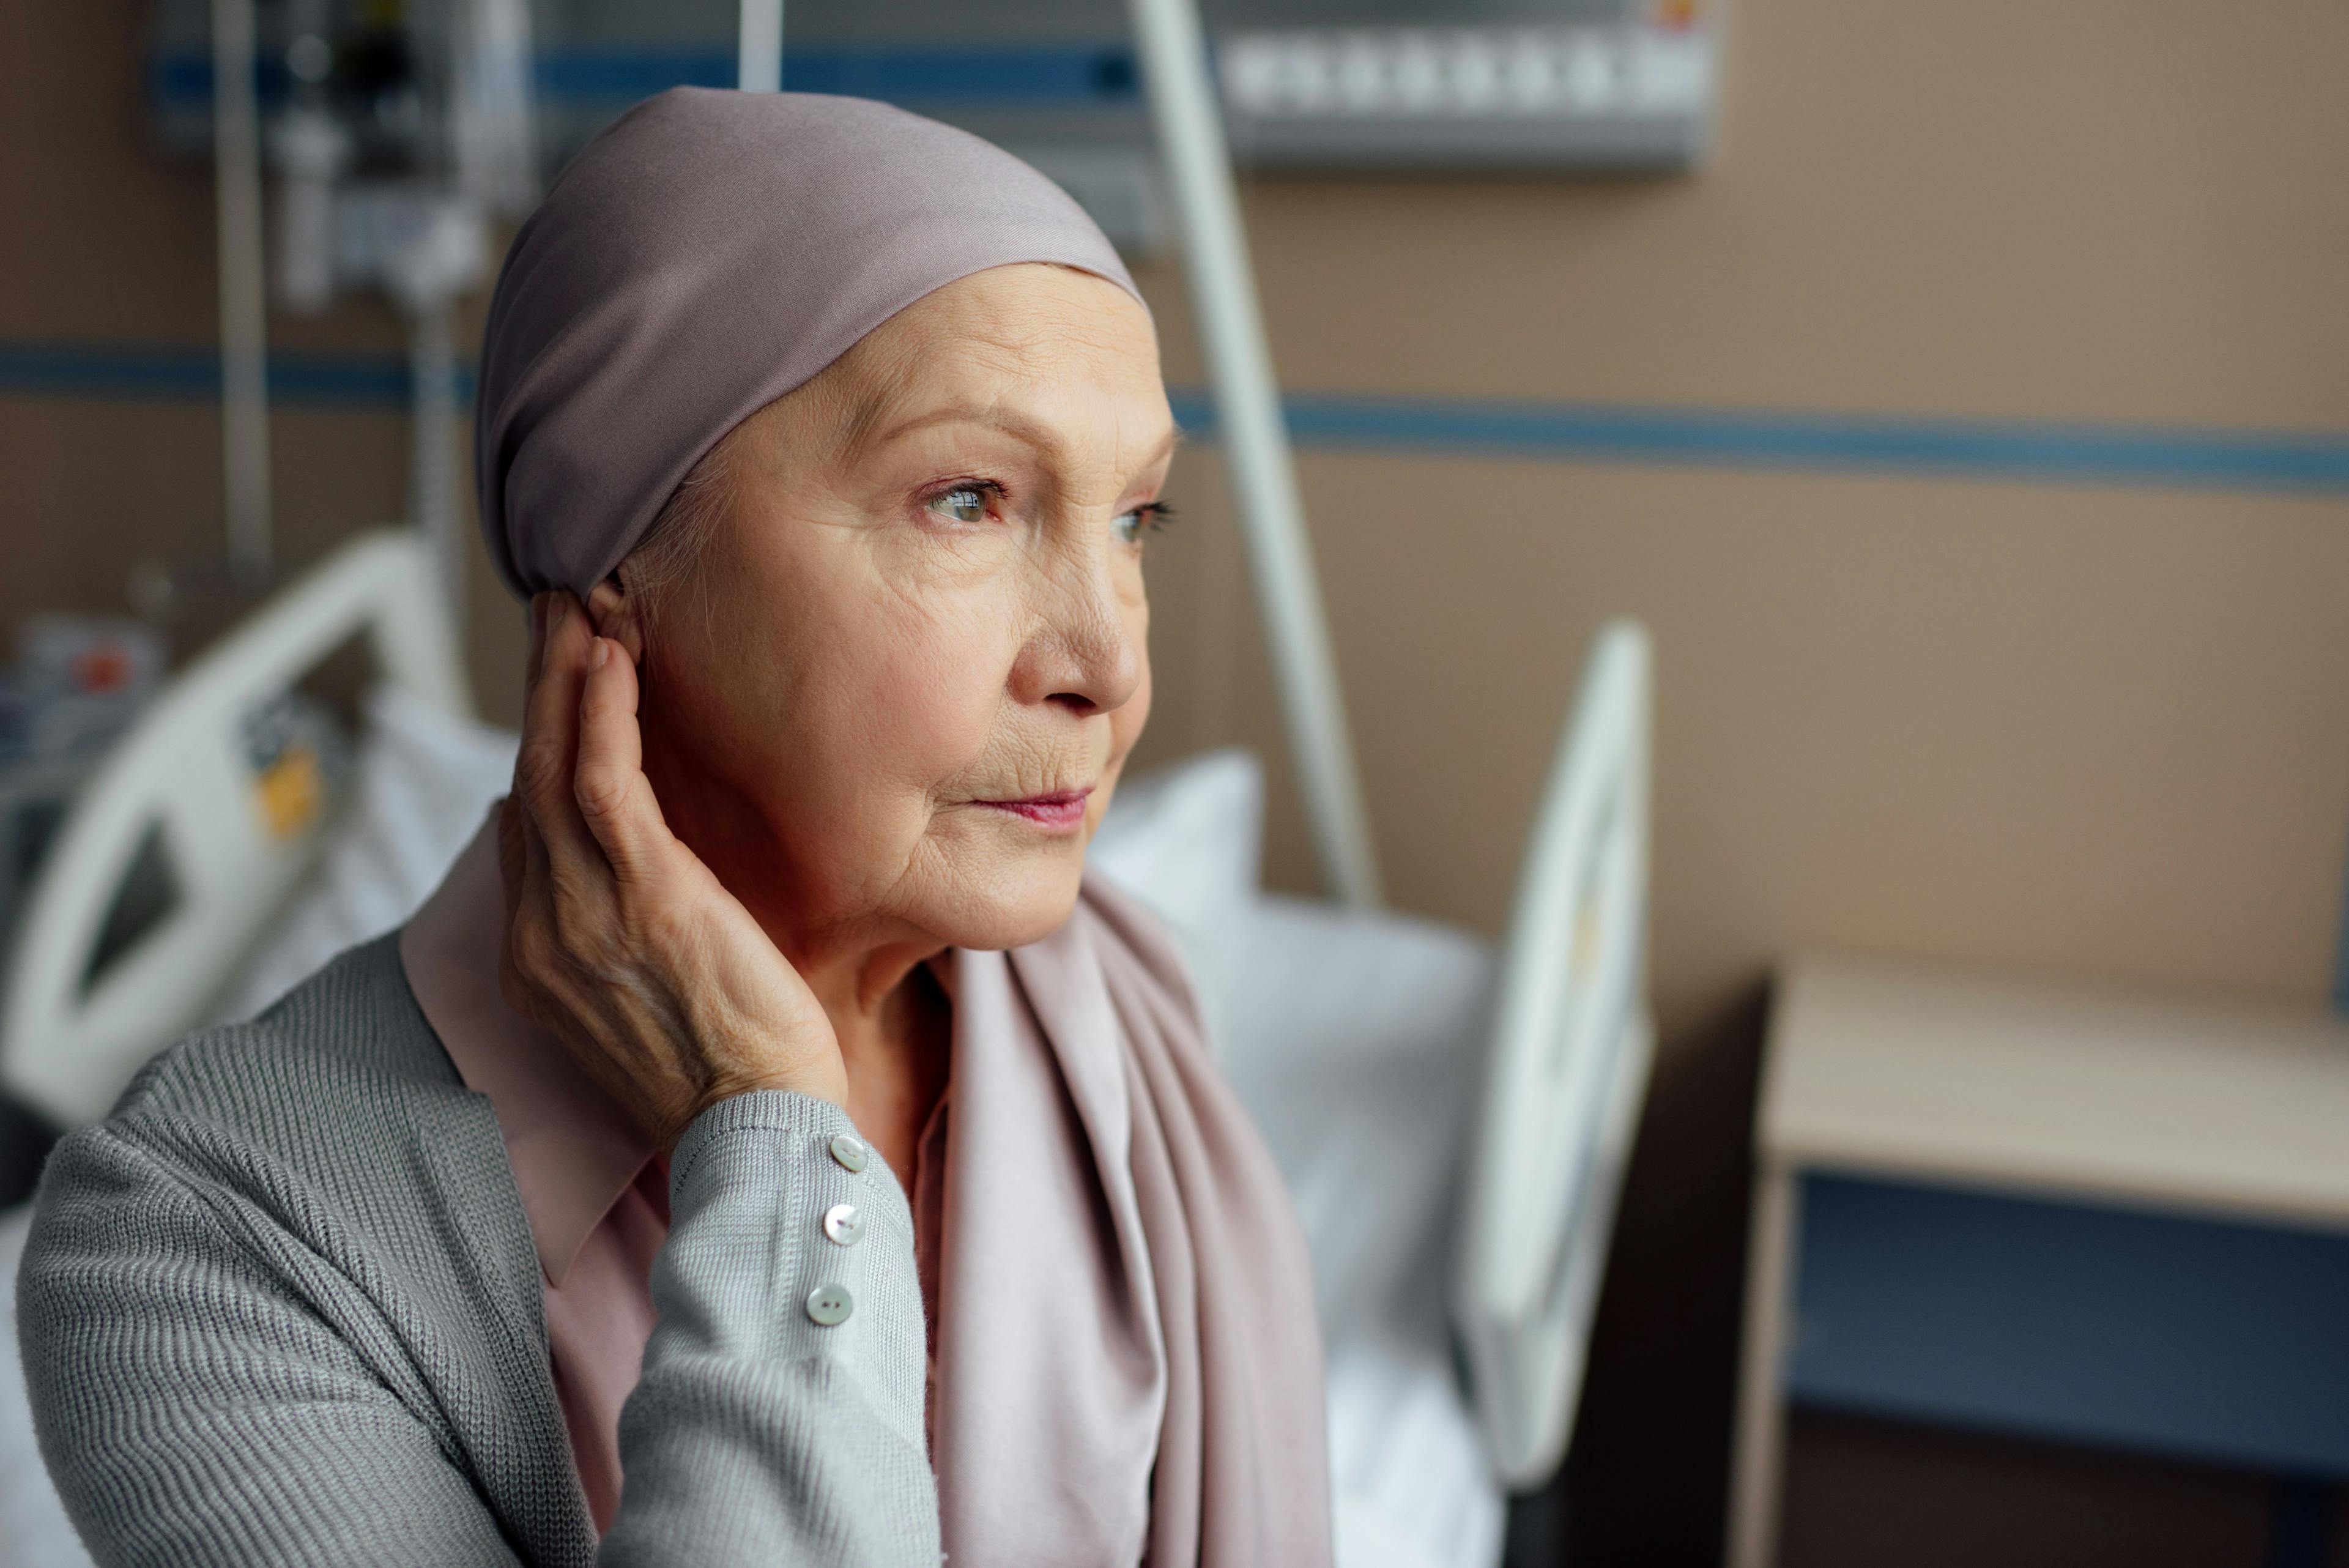 Senior woman with cancer | Image credit: LIGHTFIELD STUDIOS - stock.adobe.com